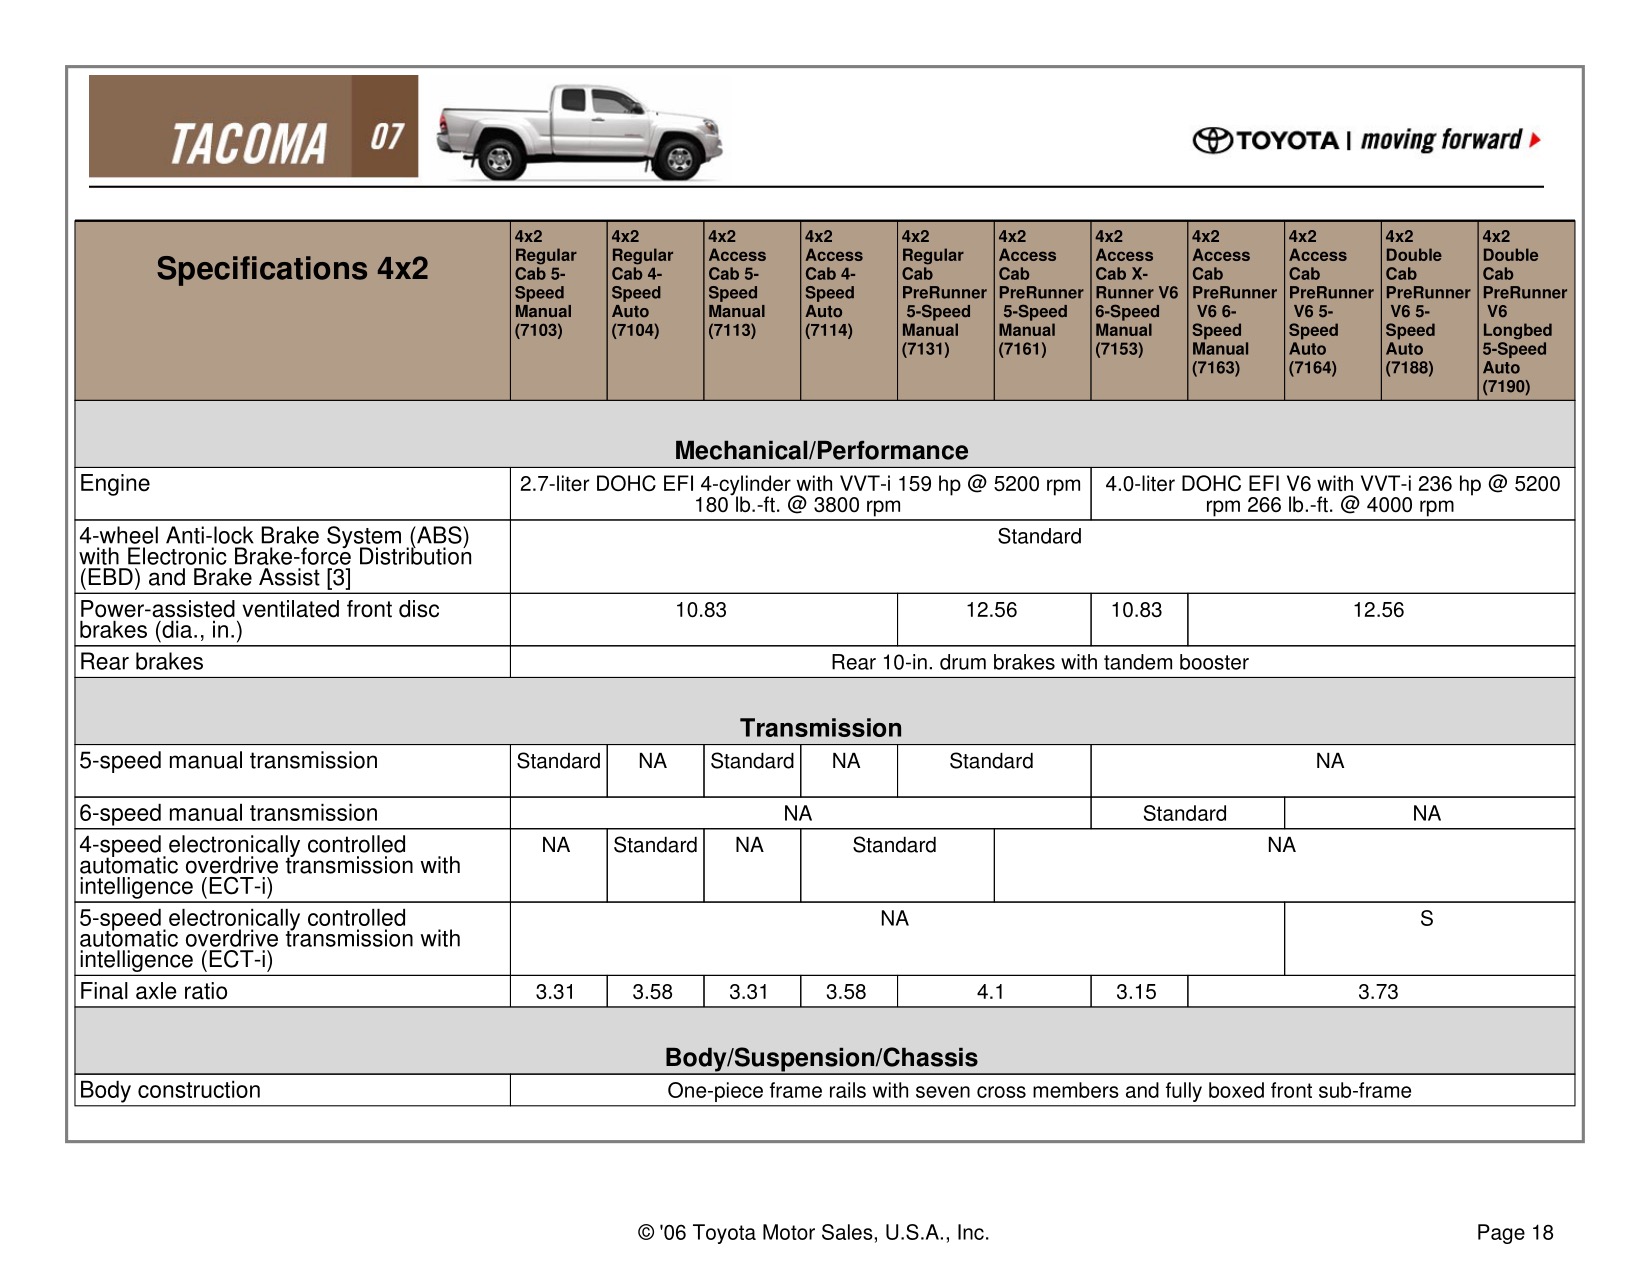 2007 Toyota Tacoma 4x2 Brochure Page 2